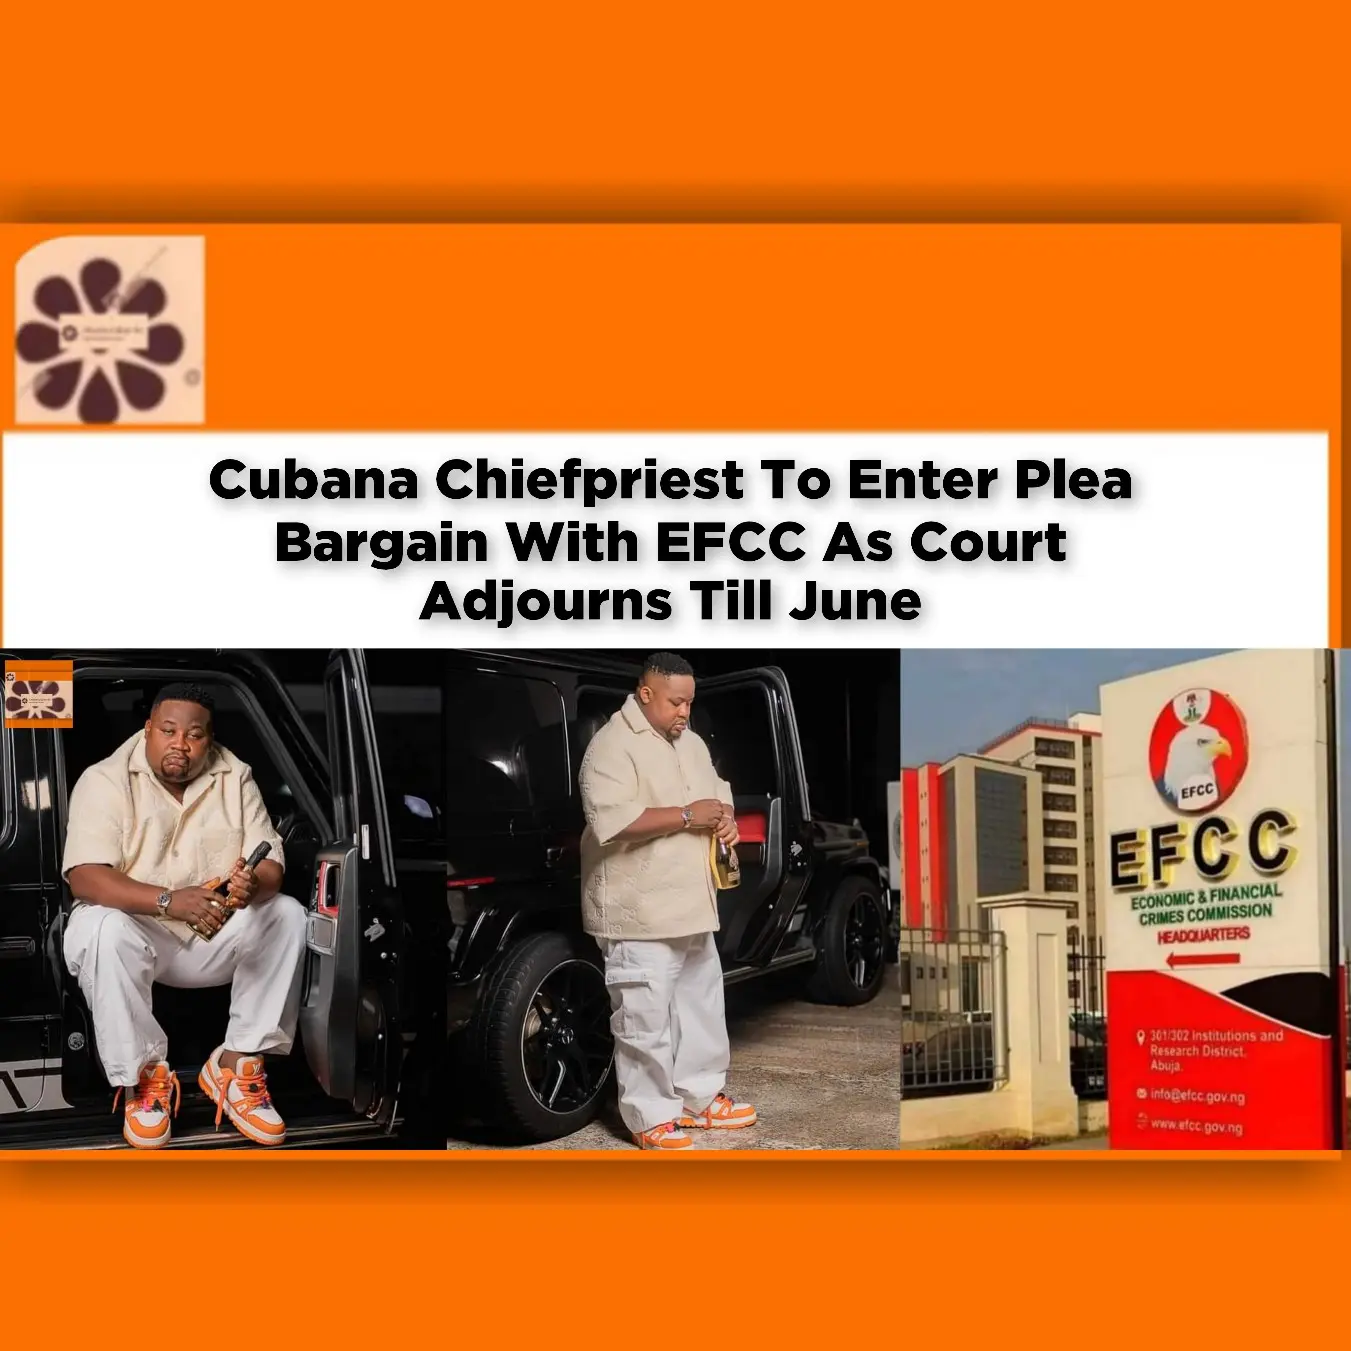 Cubana Chiefpriest To Enter Plea Bargain With EFCC As Court Adjourns Till June ~ OsazuwaAkonedo #Daniel